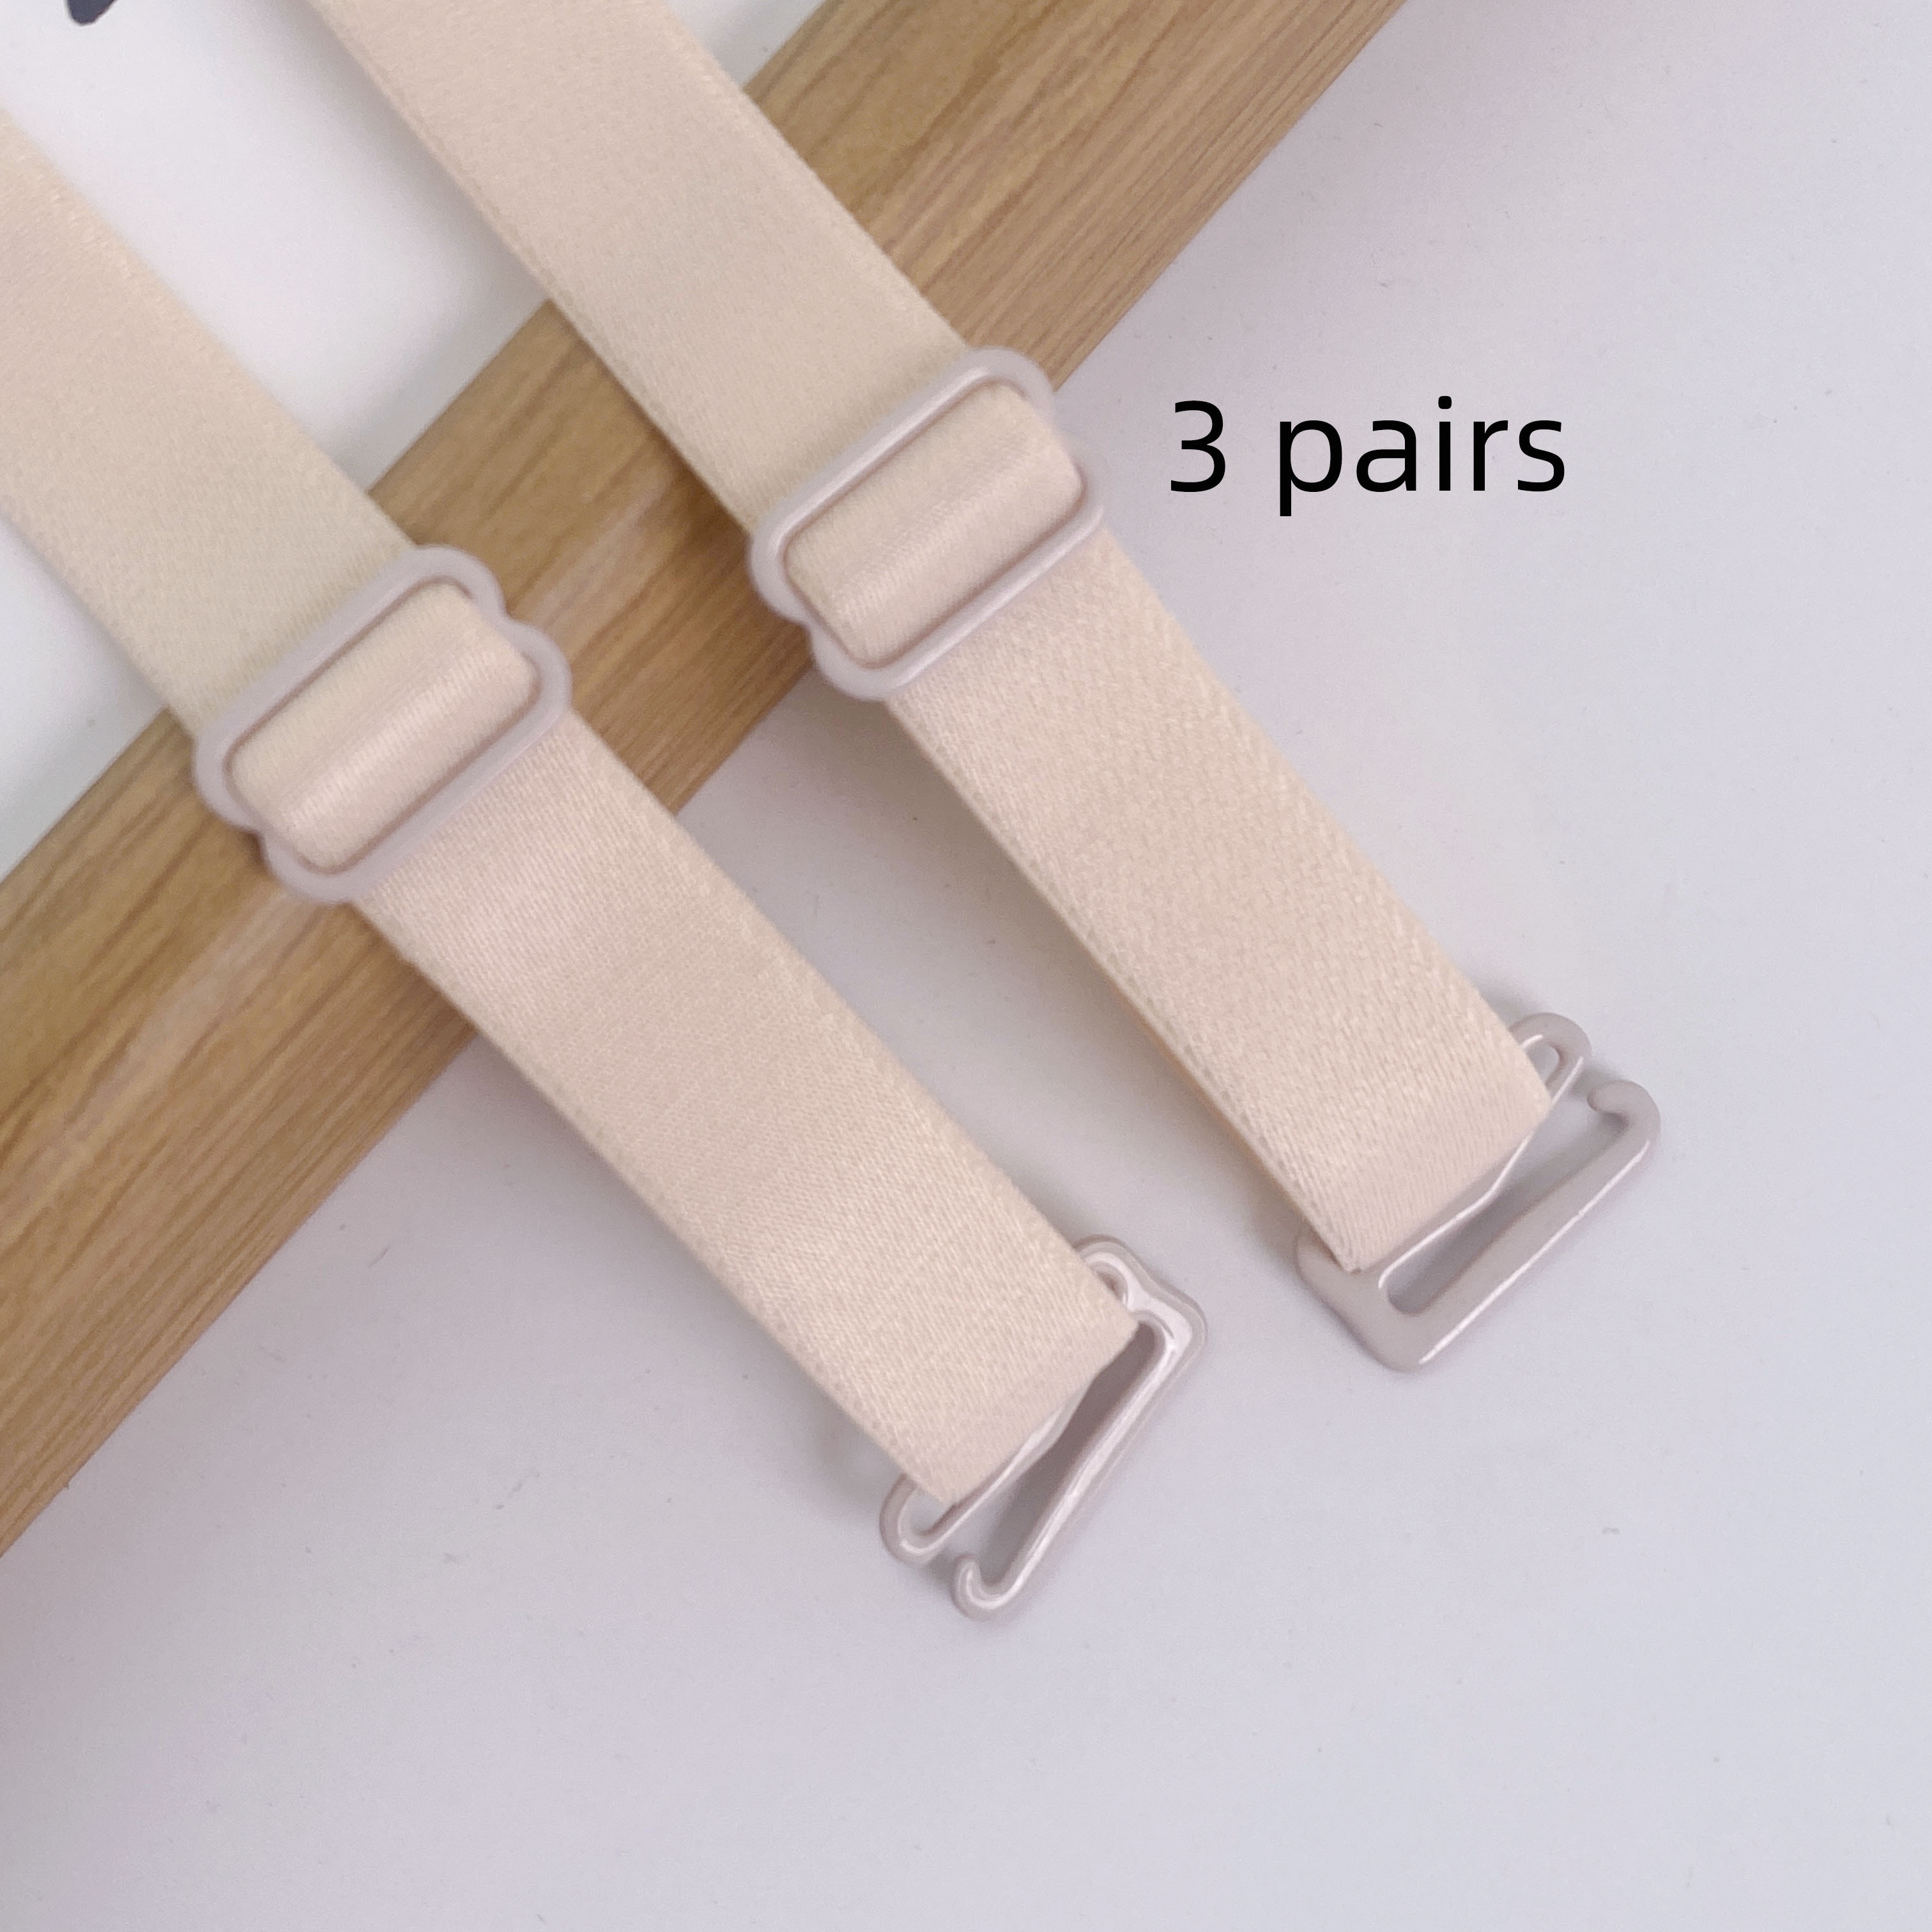  Licogel Bra Straps Replacement Adjustable Decorative 3 Pairs  Soft Removable Nonslip Universal Nylon Long Bra Shoulder Strap Racerback  Lingerie Straps : Clothing, Shoes & Jewelry